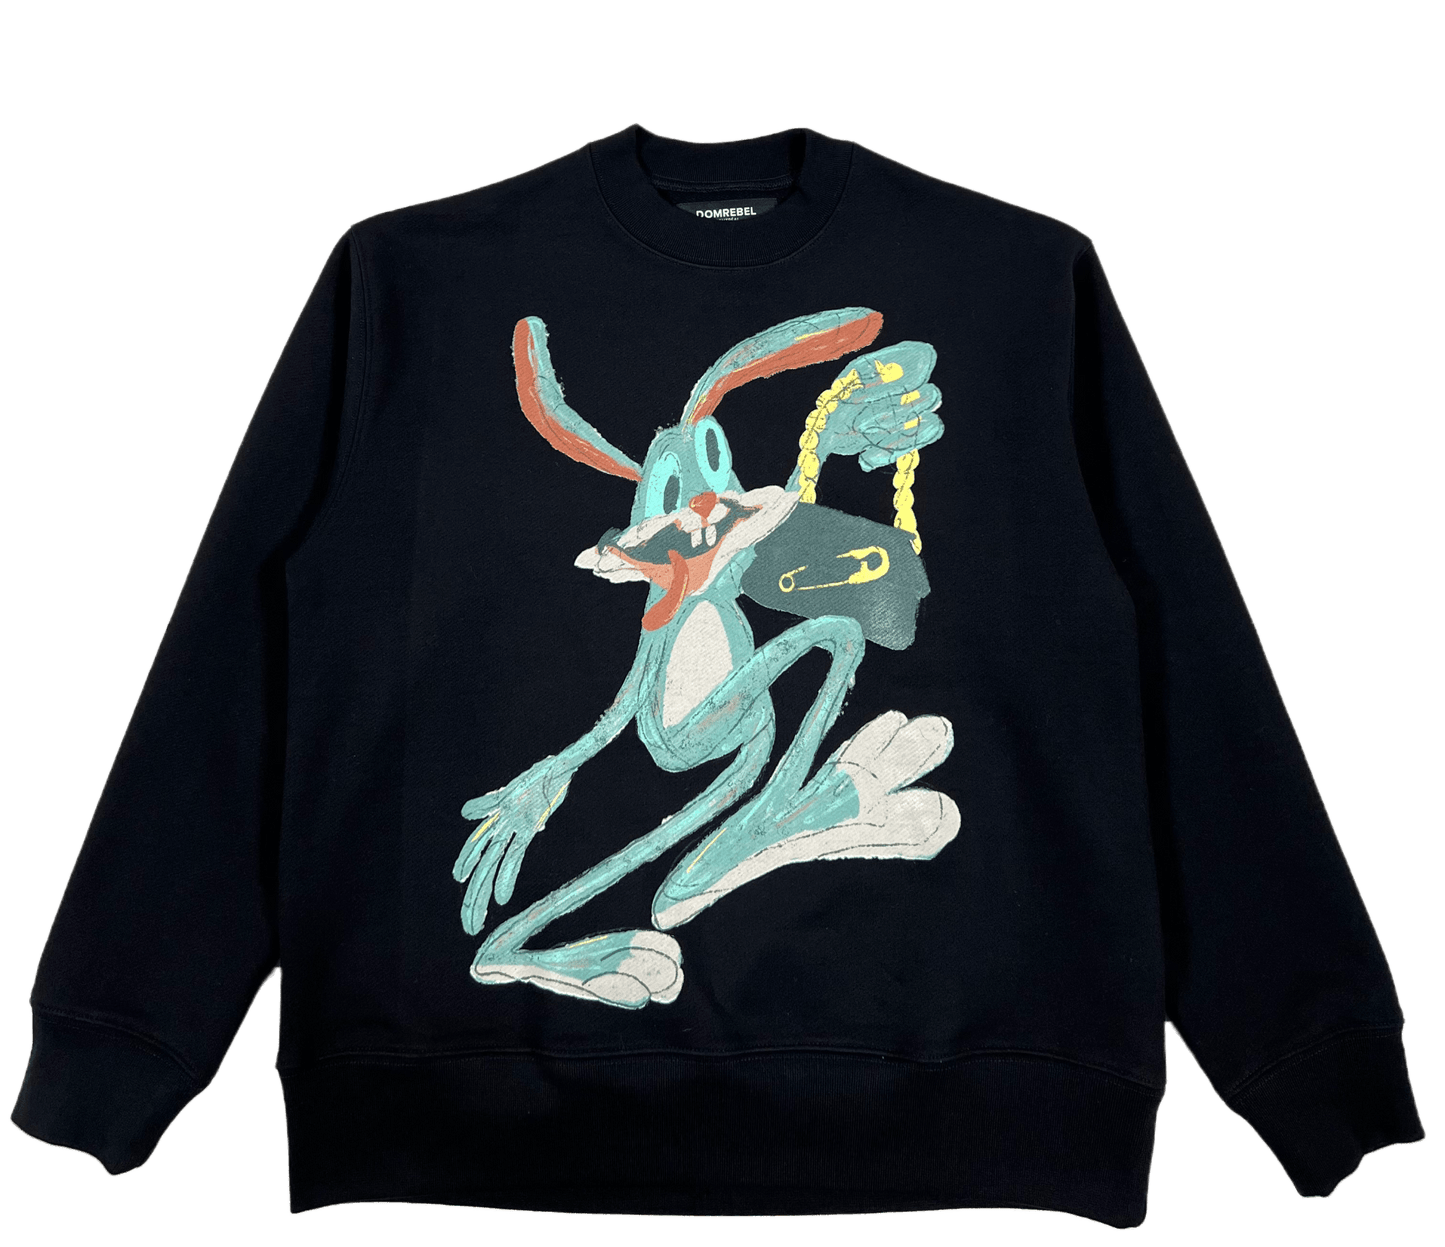 A black Dom Rebel Shopper Sweatshirt with a cartoon rabbit on it.